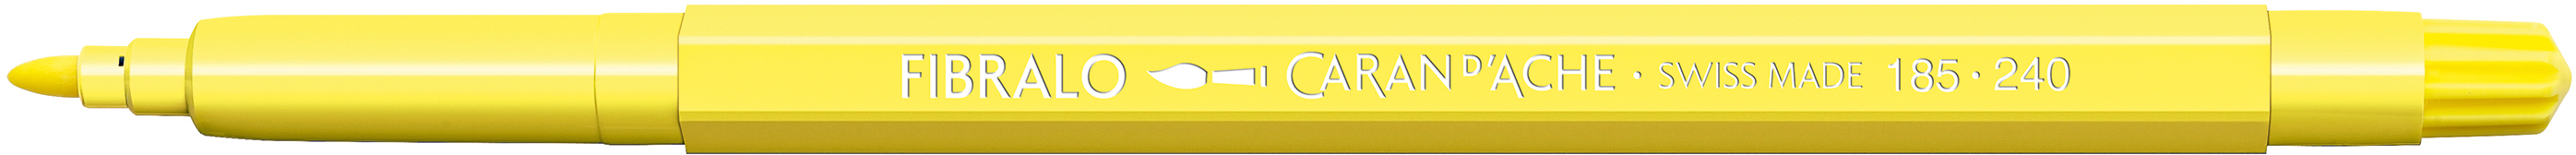 CARAN D'ACHE Stylo fibre Fibralo 185.240 jaune